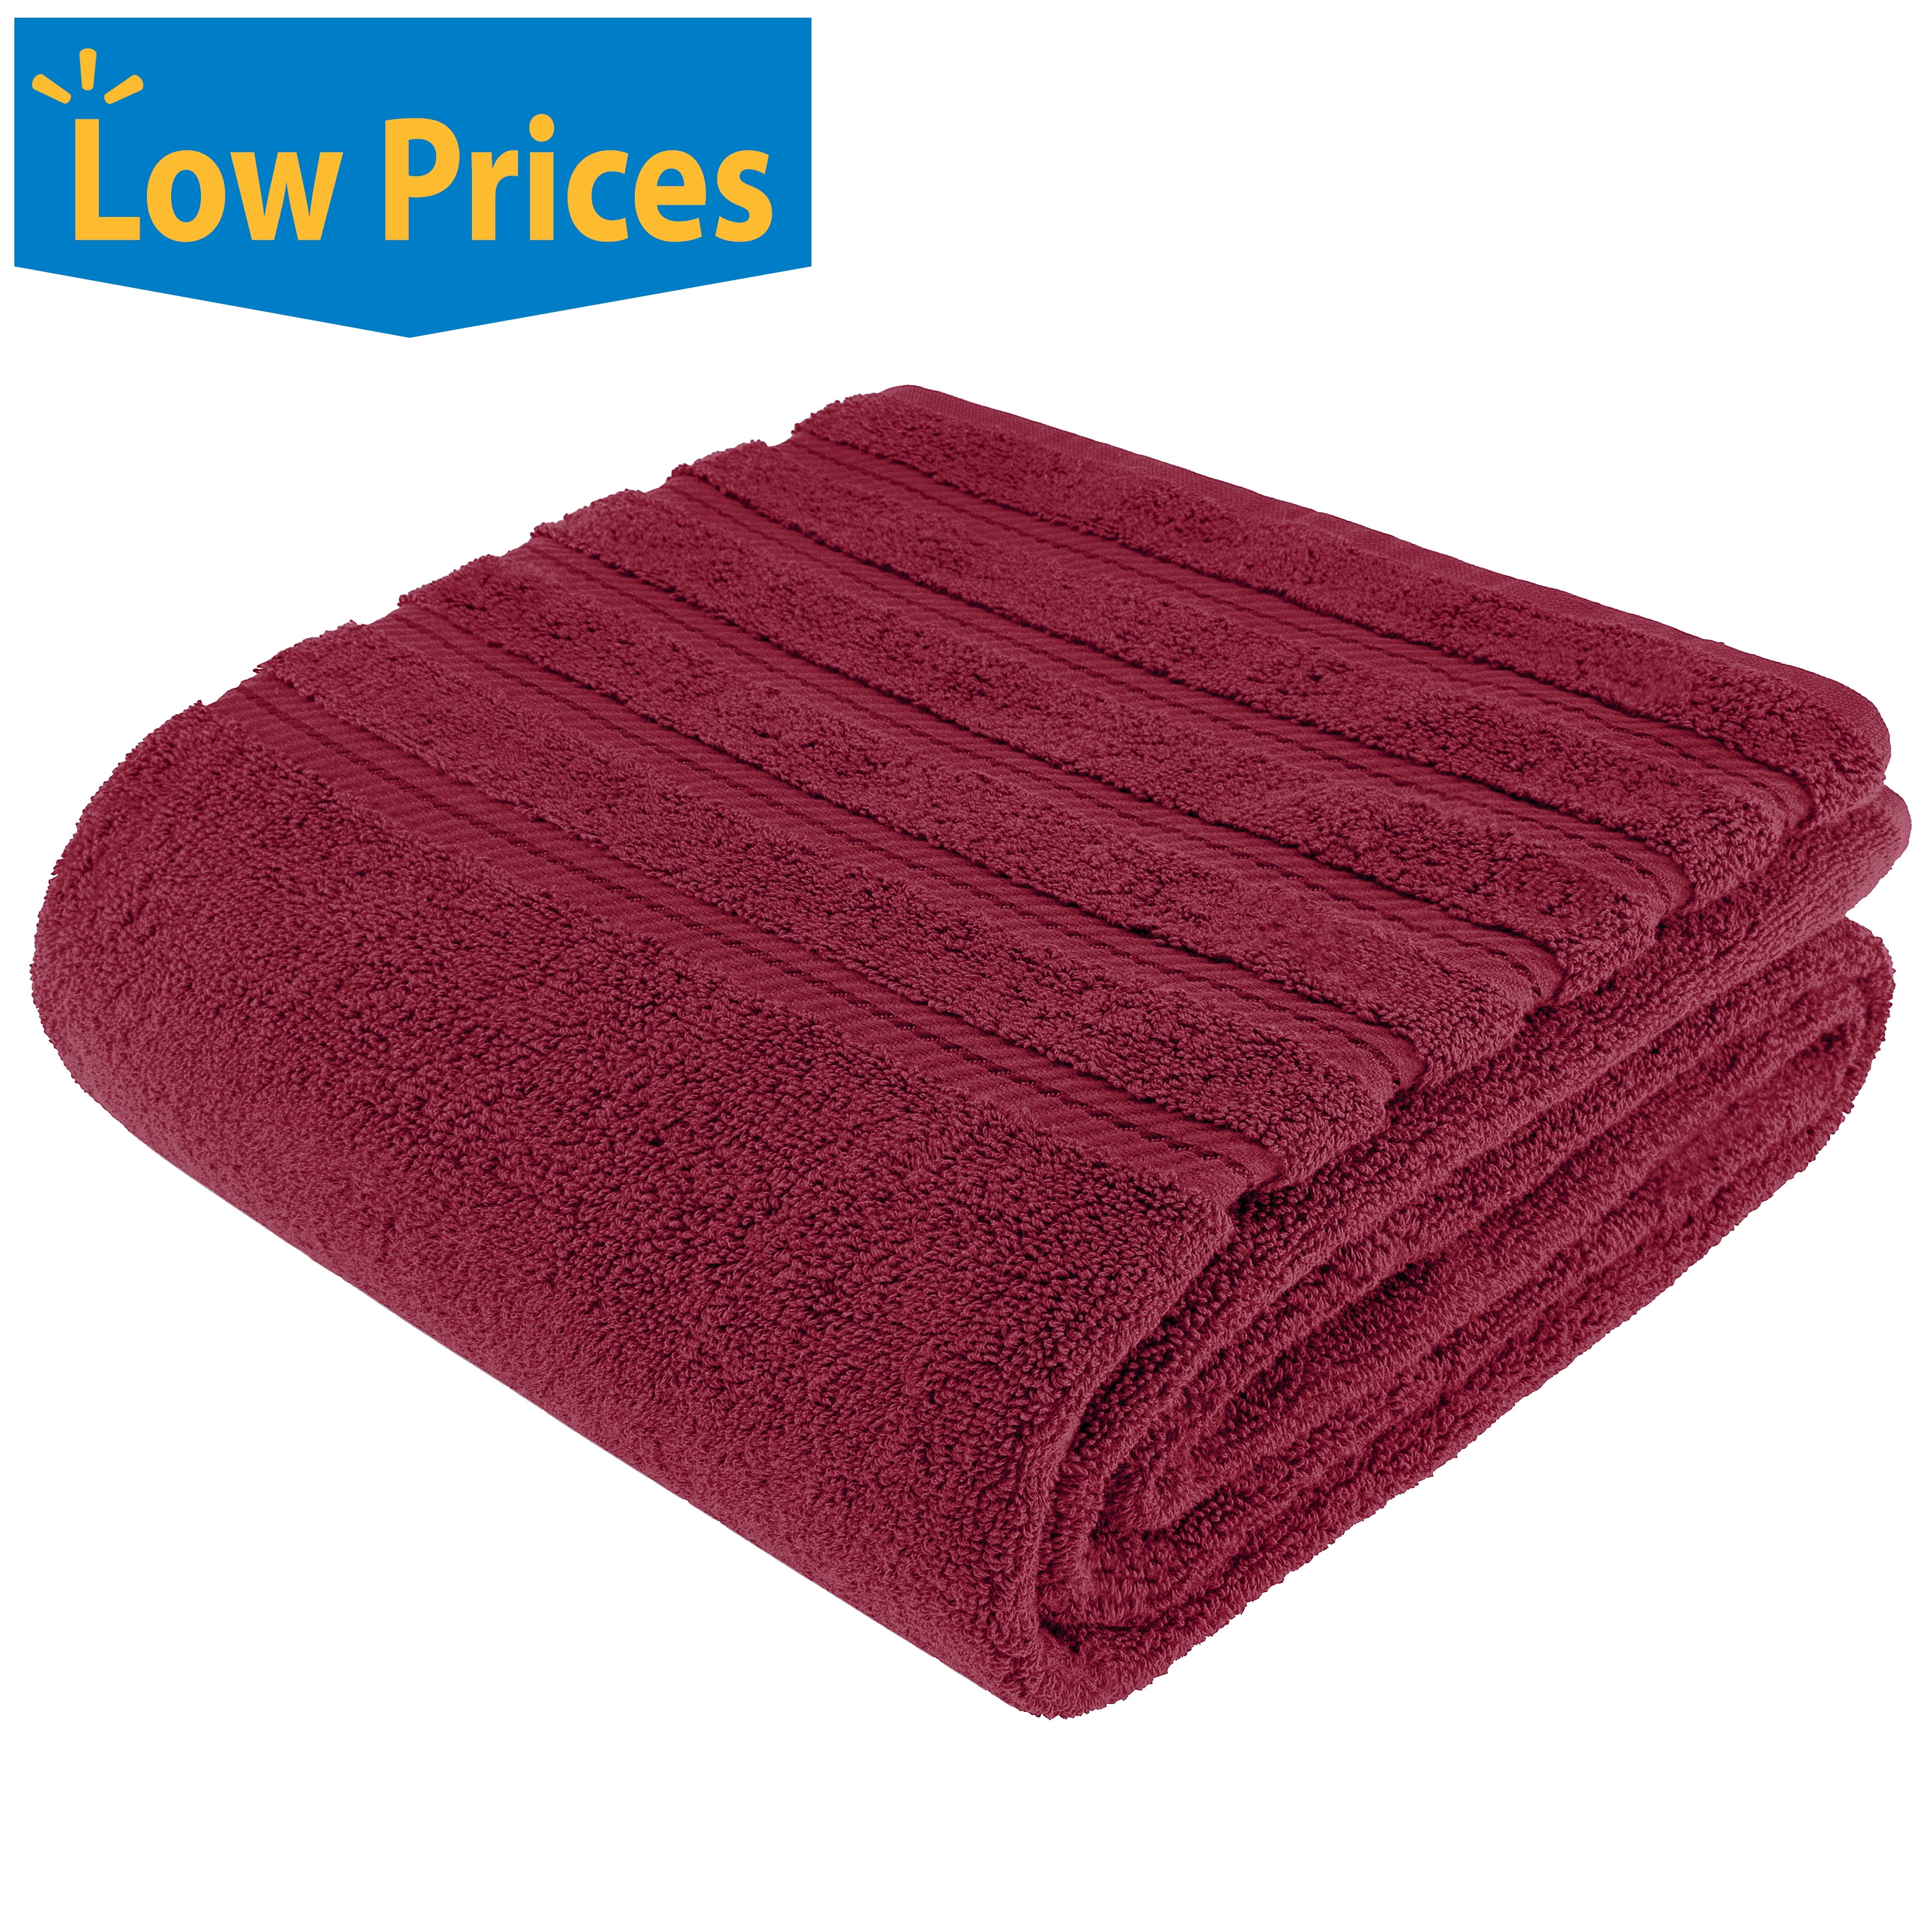 100% Cotton Extra Large Oversized Bath Towel Navy Brown Bath Sheet 35x70 